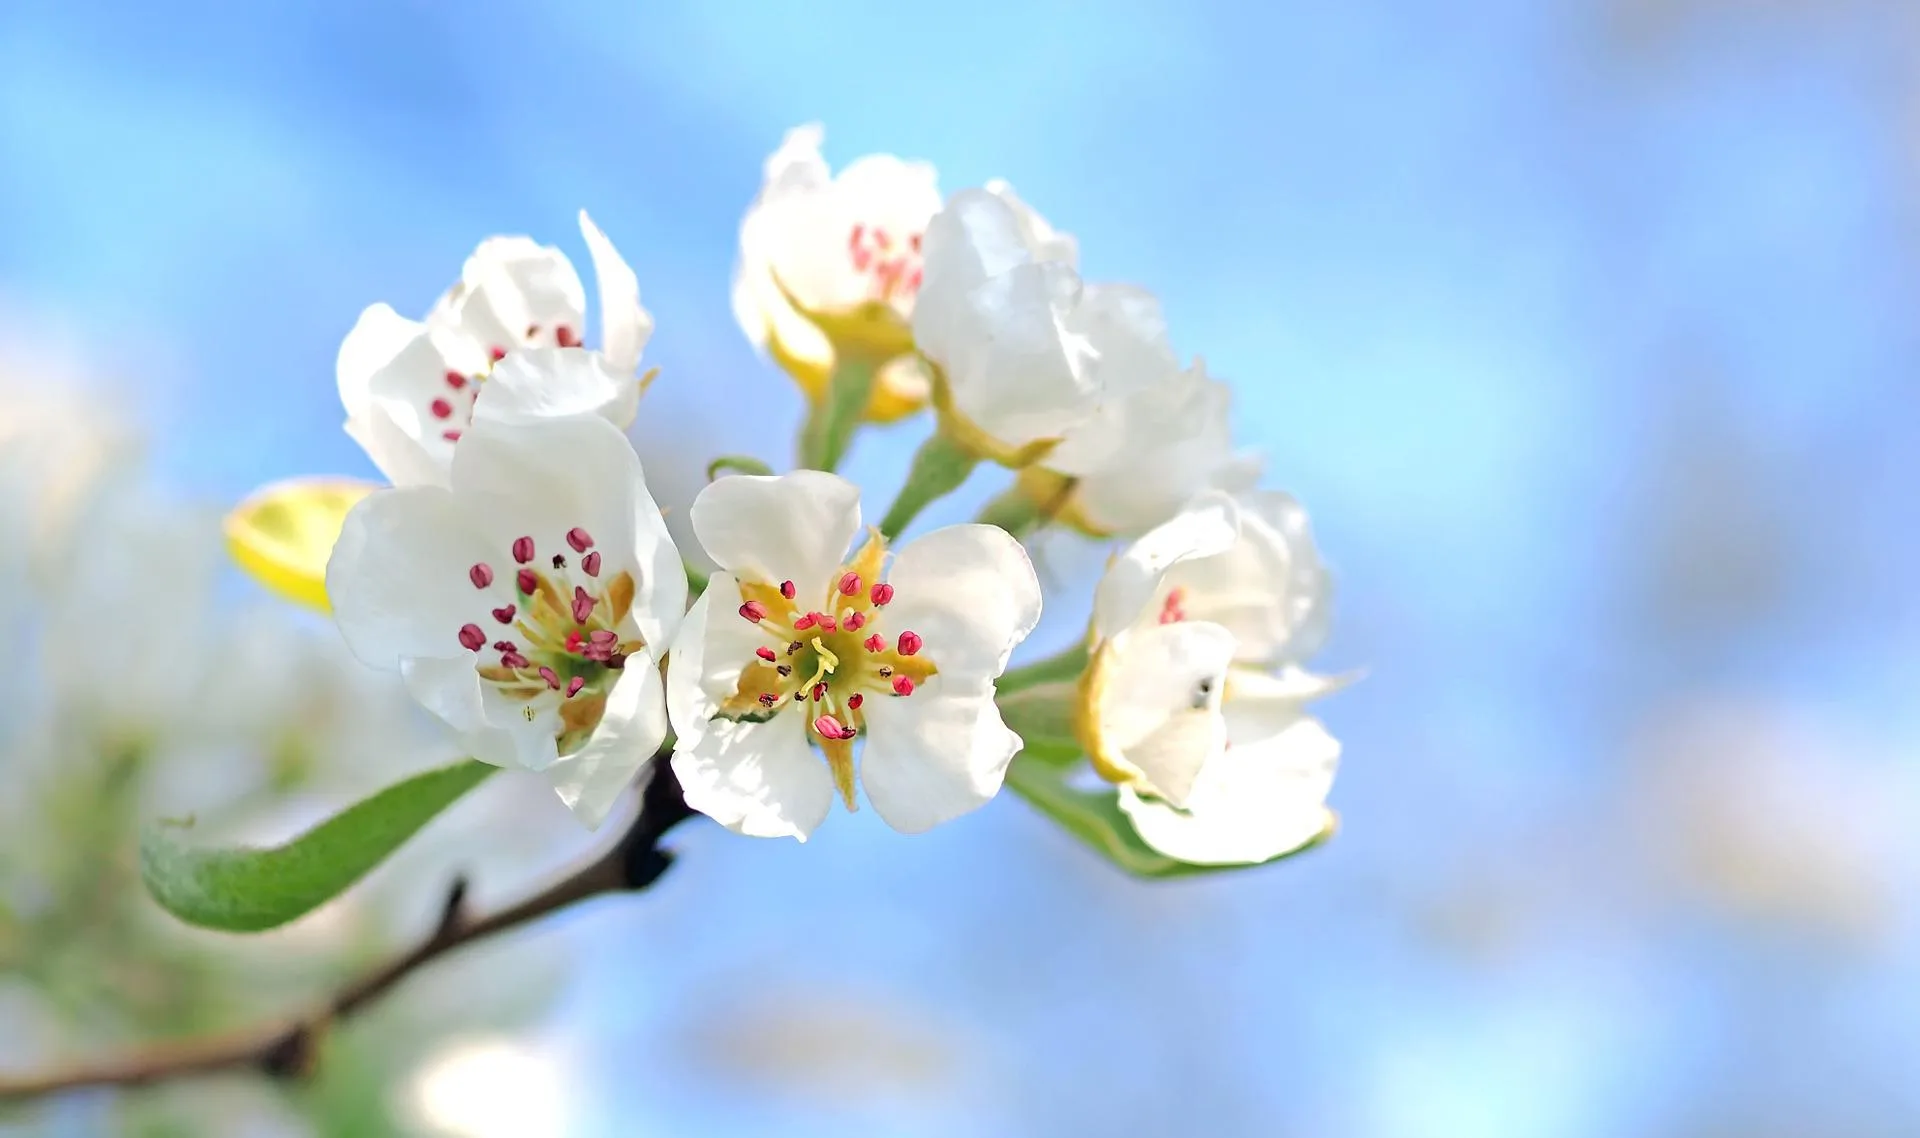 Close-up of a white apple blossom